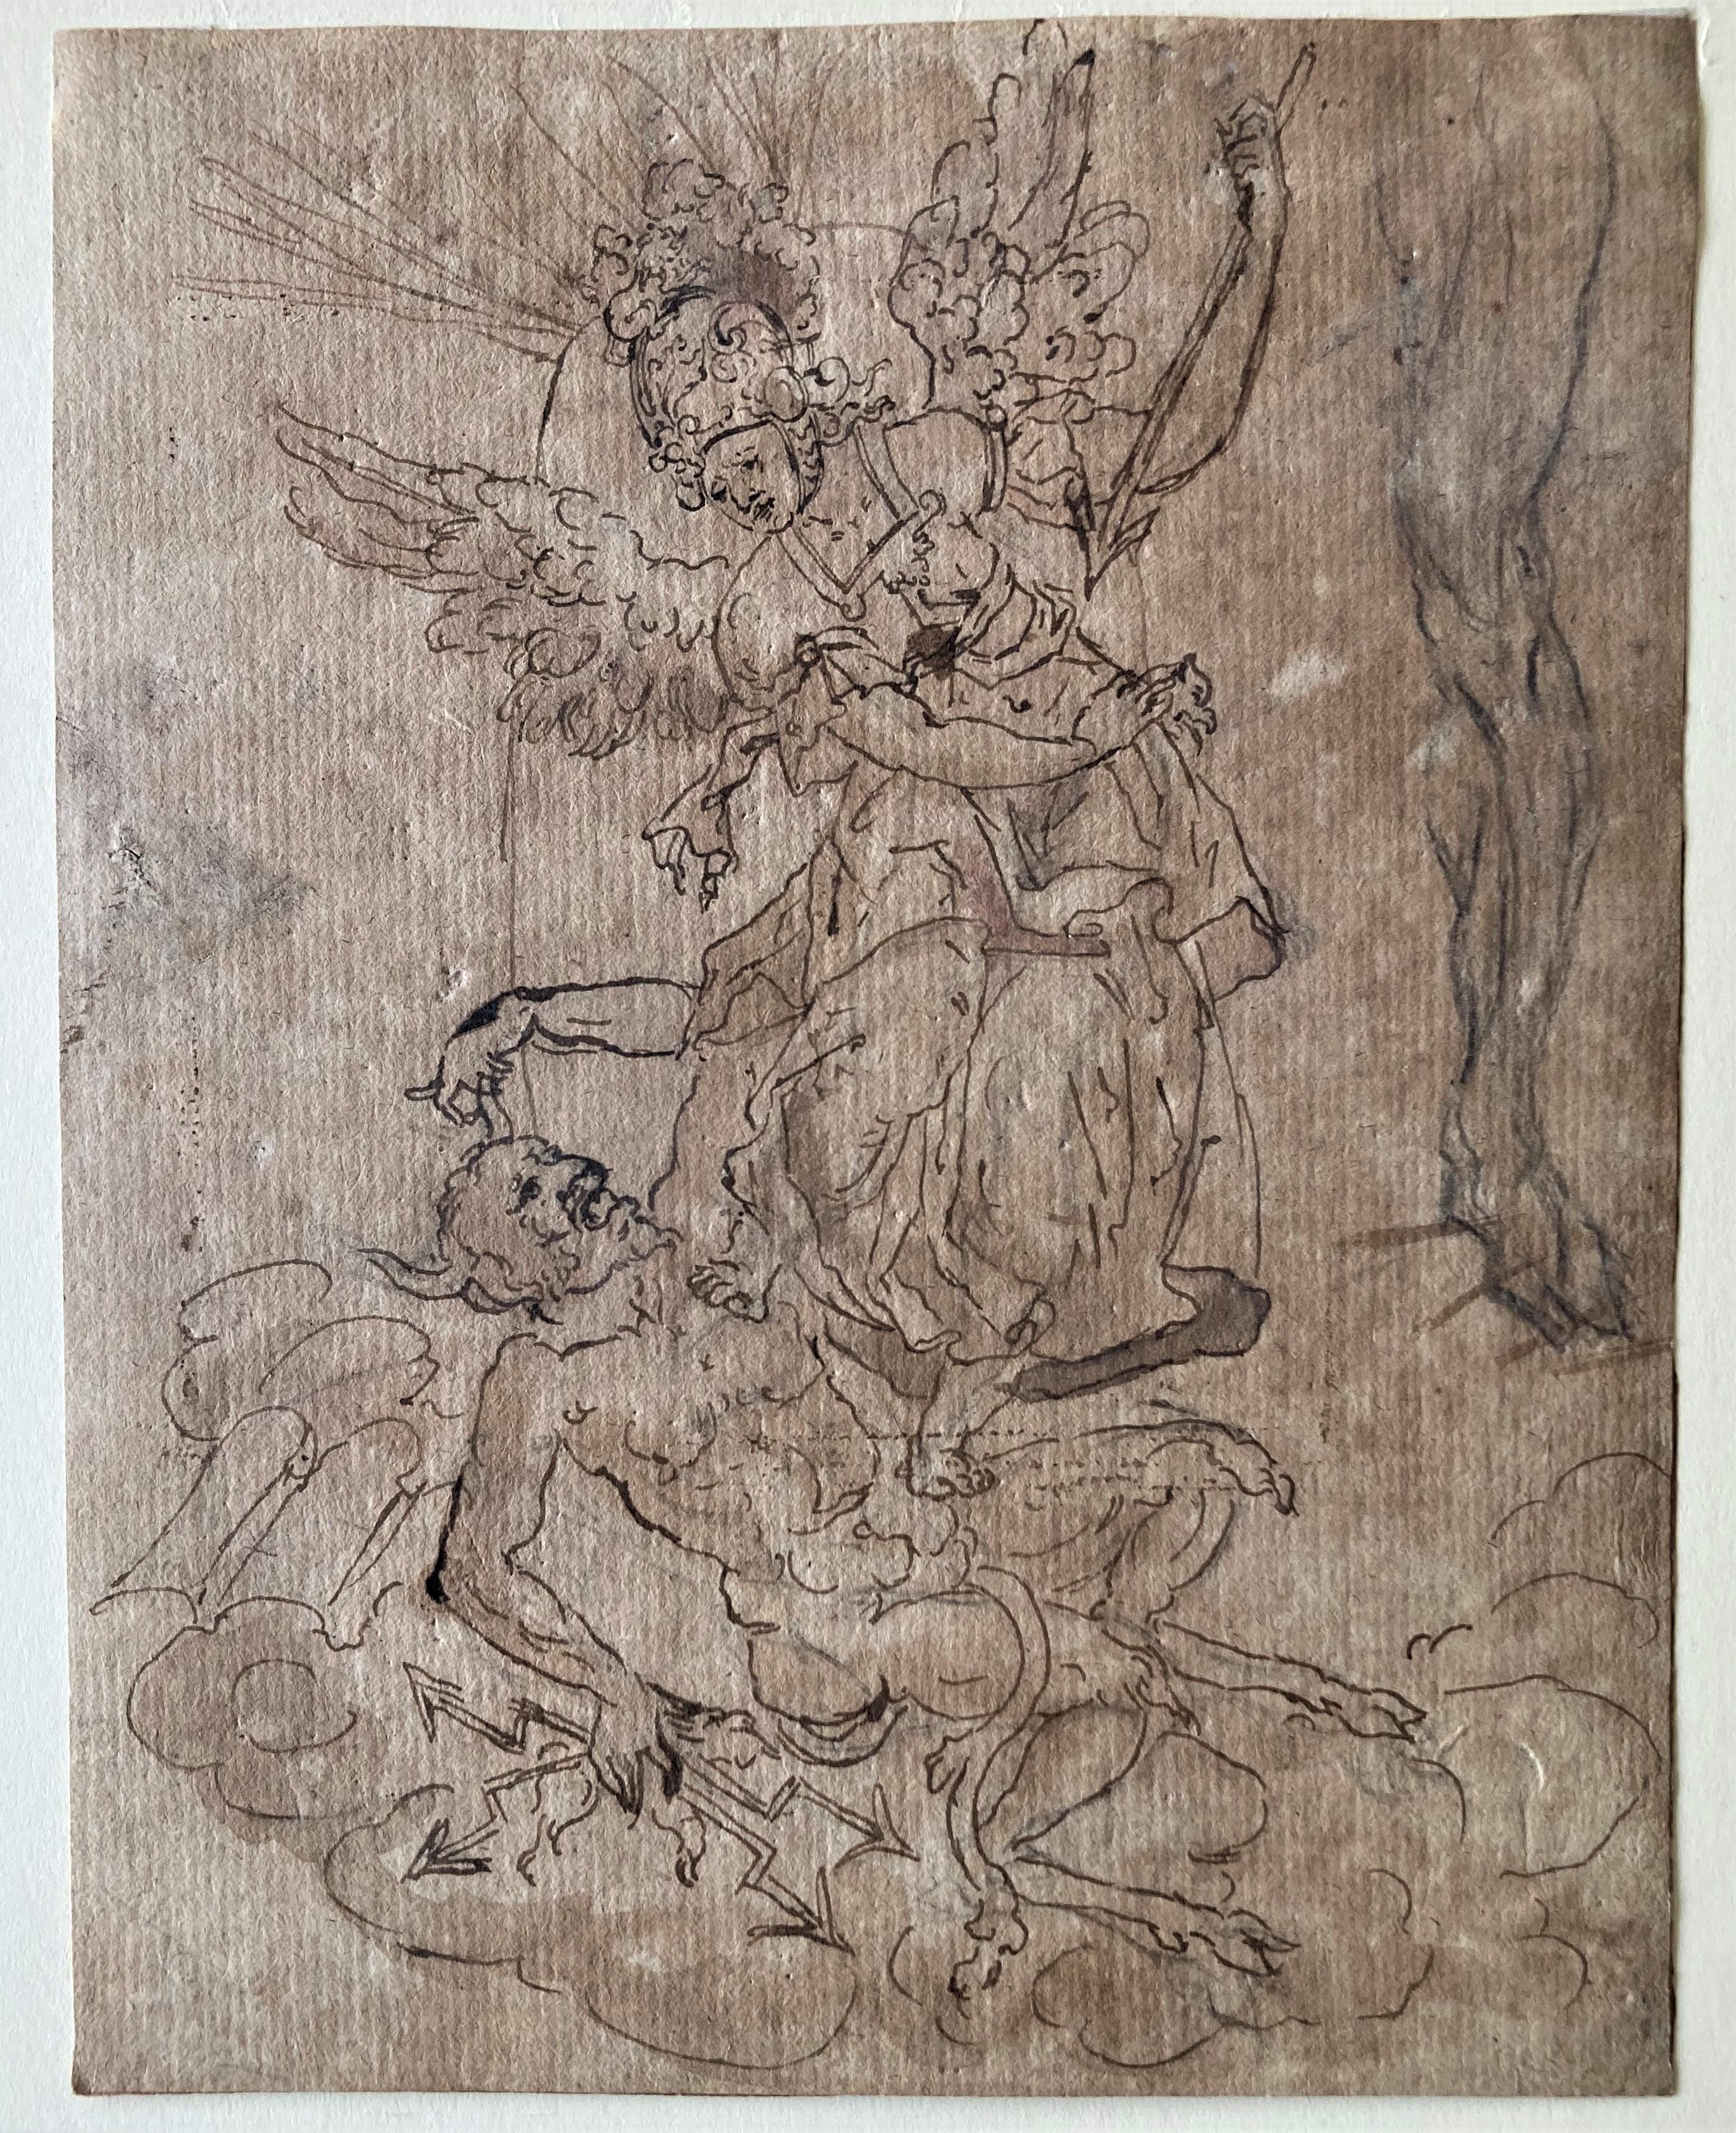 Southern German School, Sustris, Archangel Michael defeating Satan, Old Master - Art by Unknown